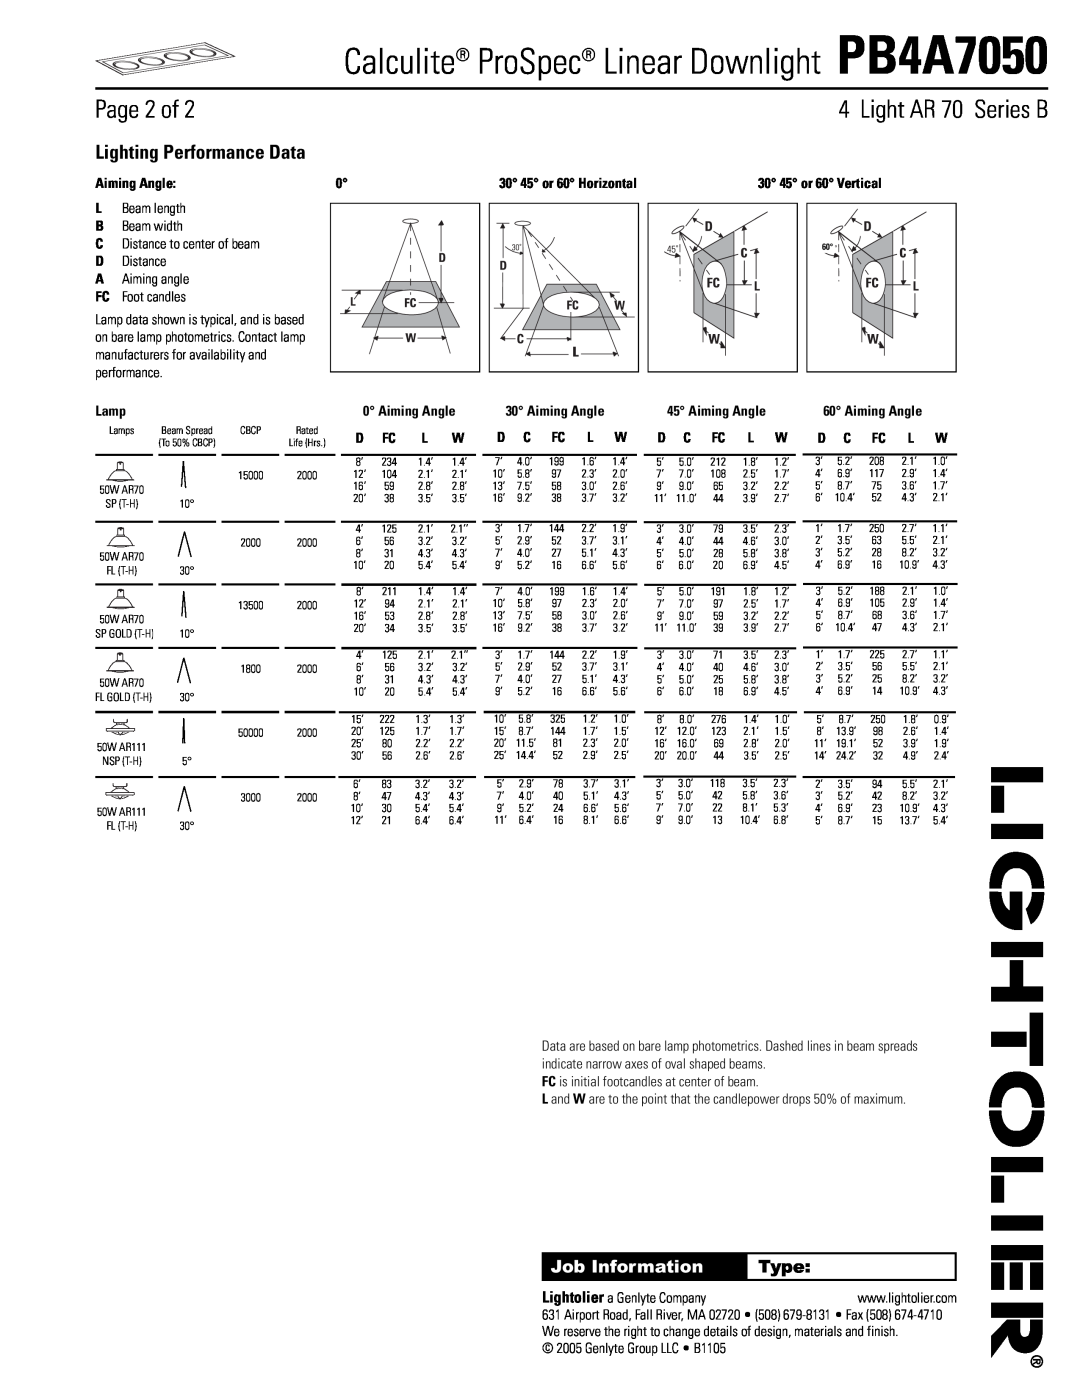 Lightolier PB4A7050 manual Page 2 of, Light AR 70 Series B, Lighting Performance Data, Job Information, Type 